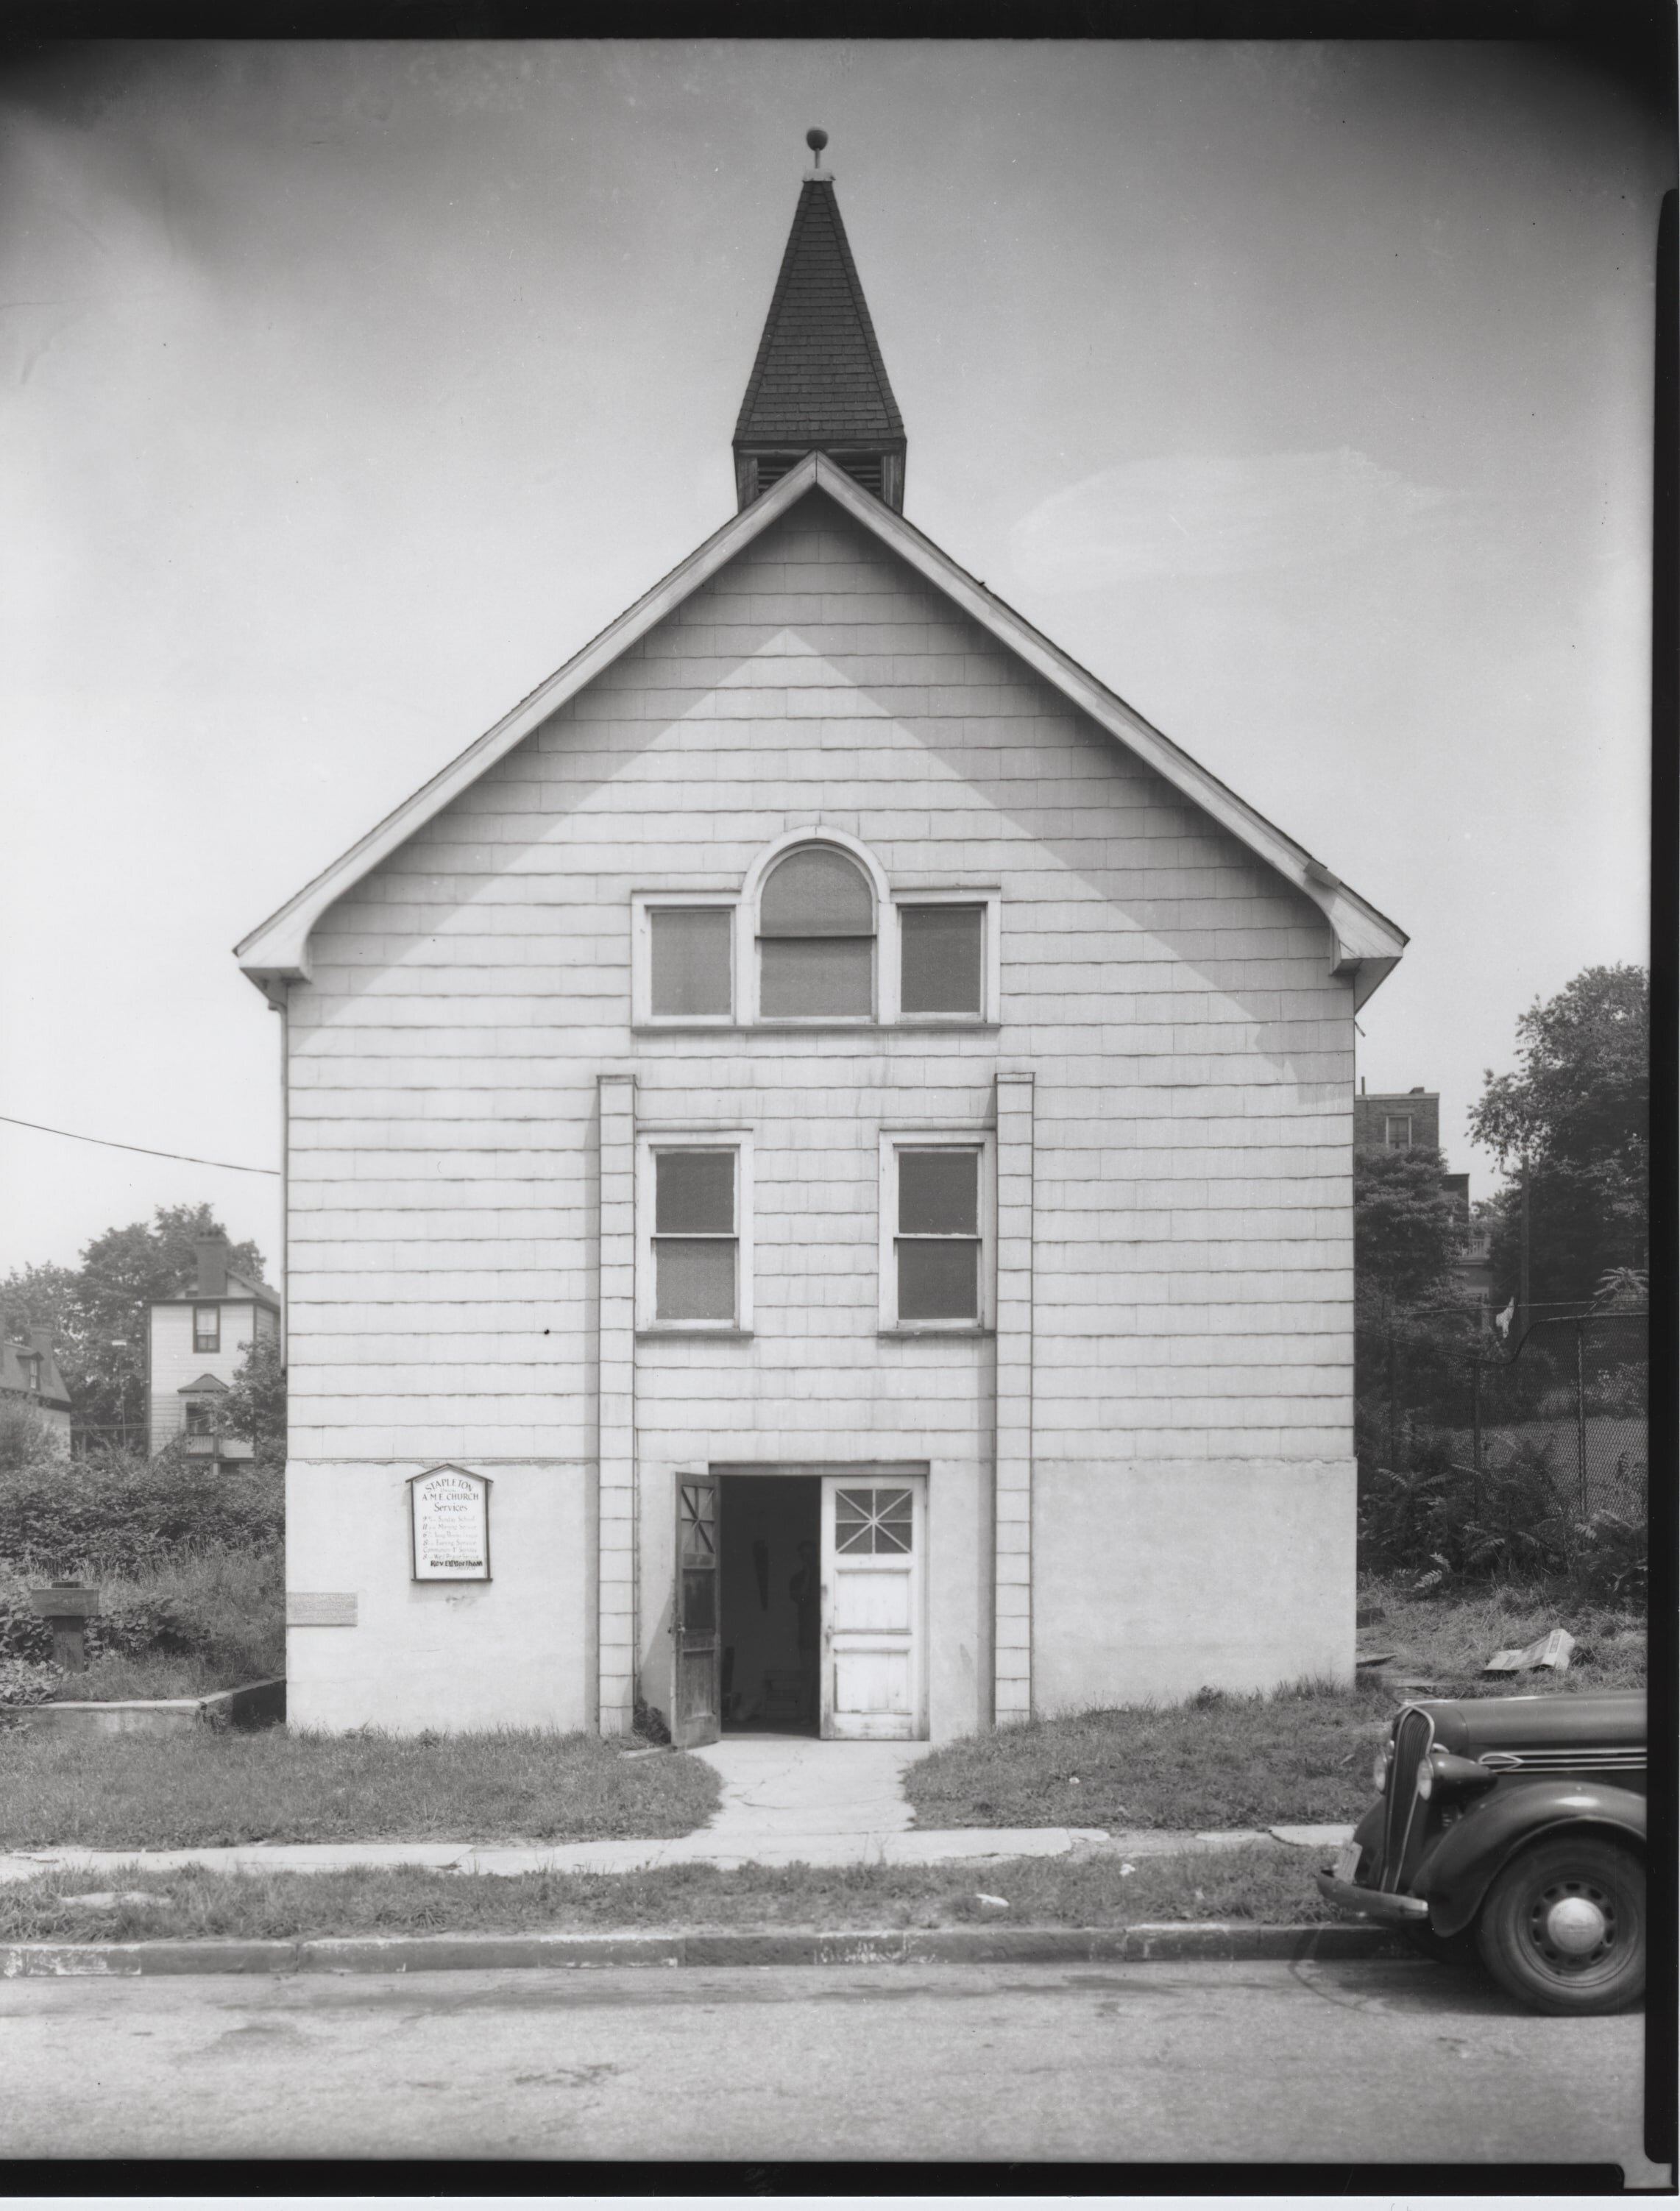 Stapleton Union American Methodist Episcopal Church, photo by Herbert A. Flamm, July 20, 1950. (Copy)